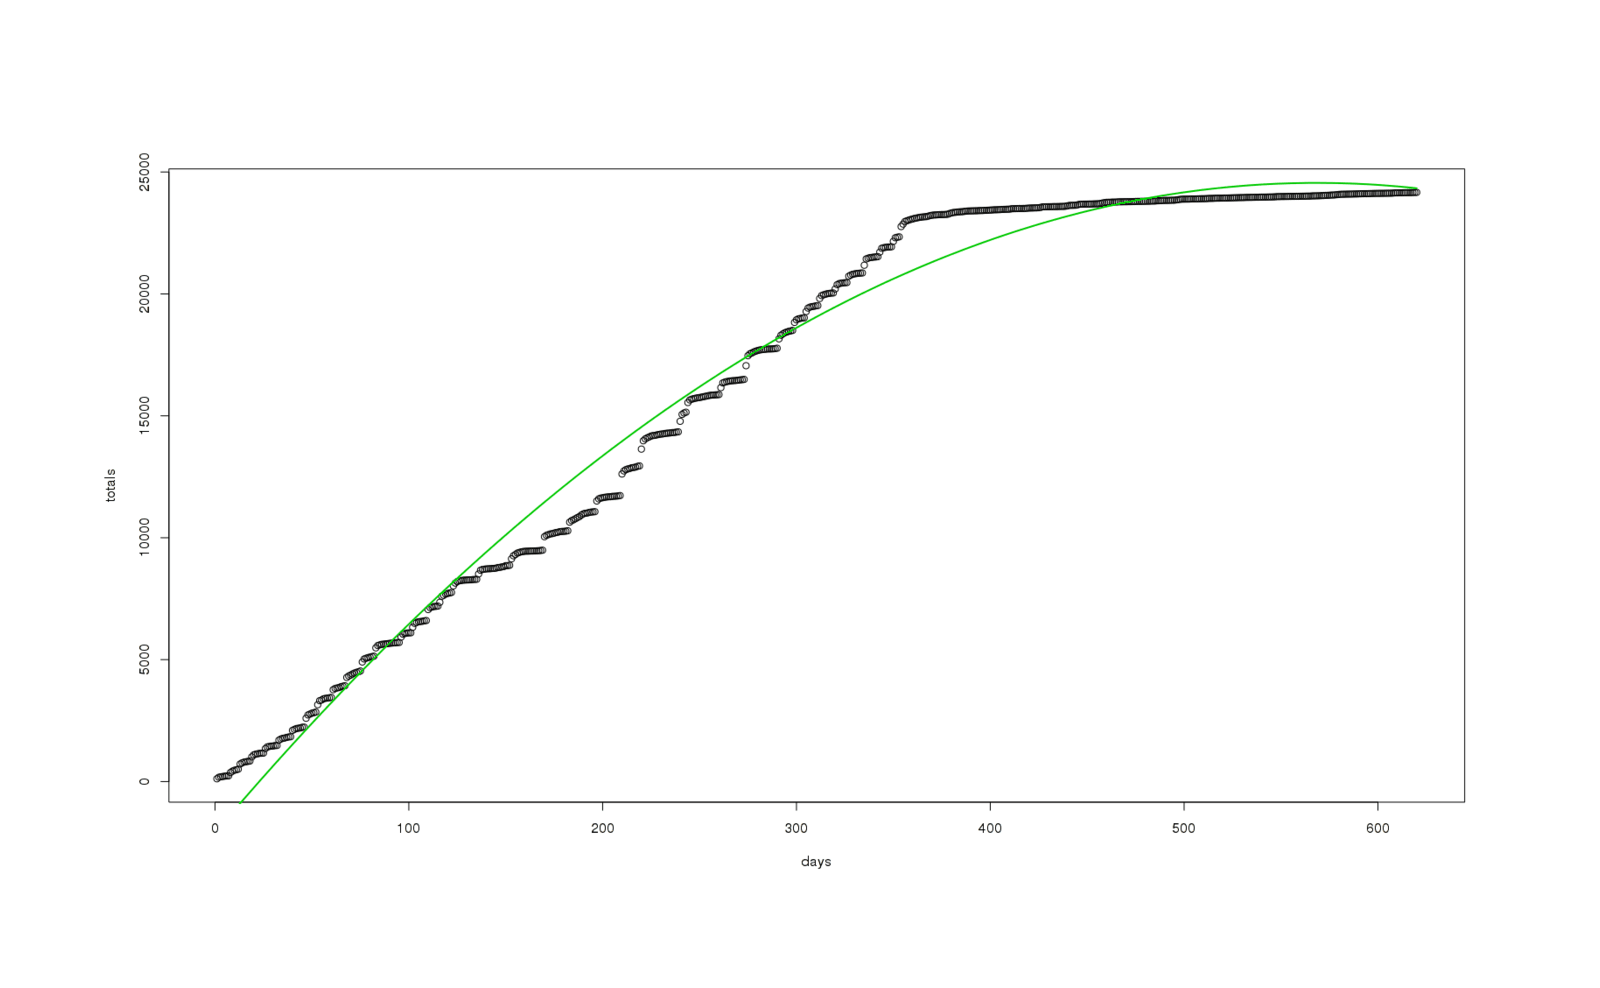 Same graph, better (but still bad) quadratic fit overlaid